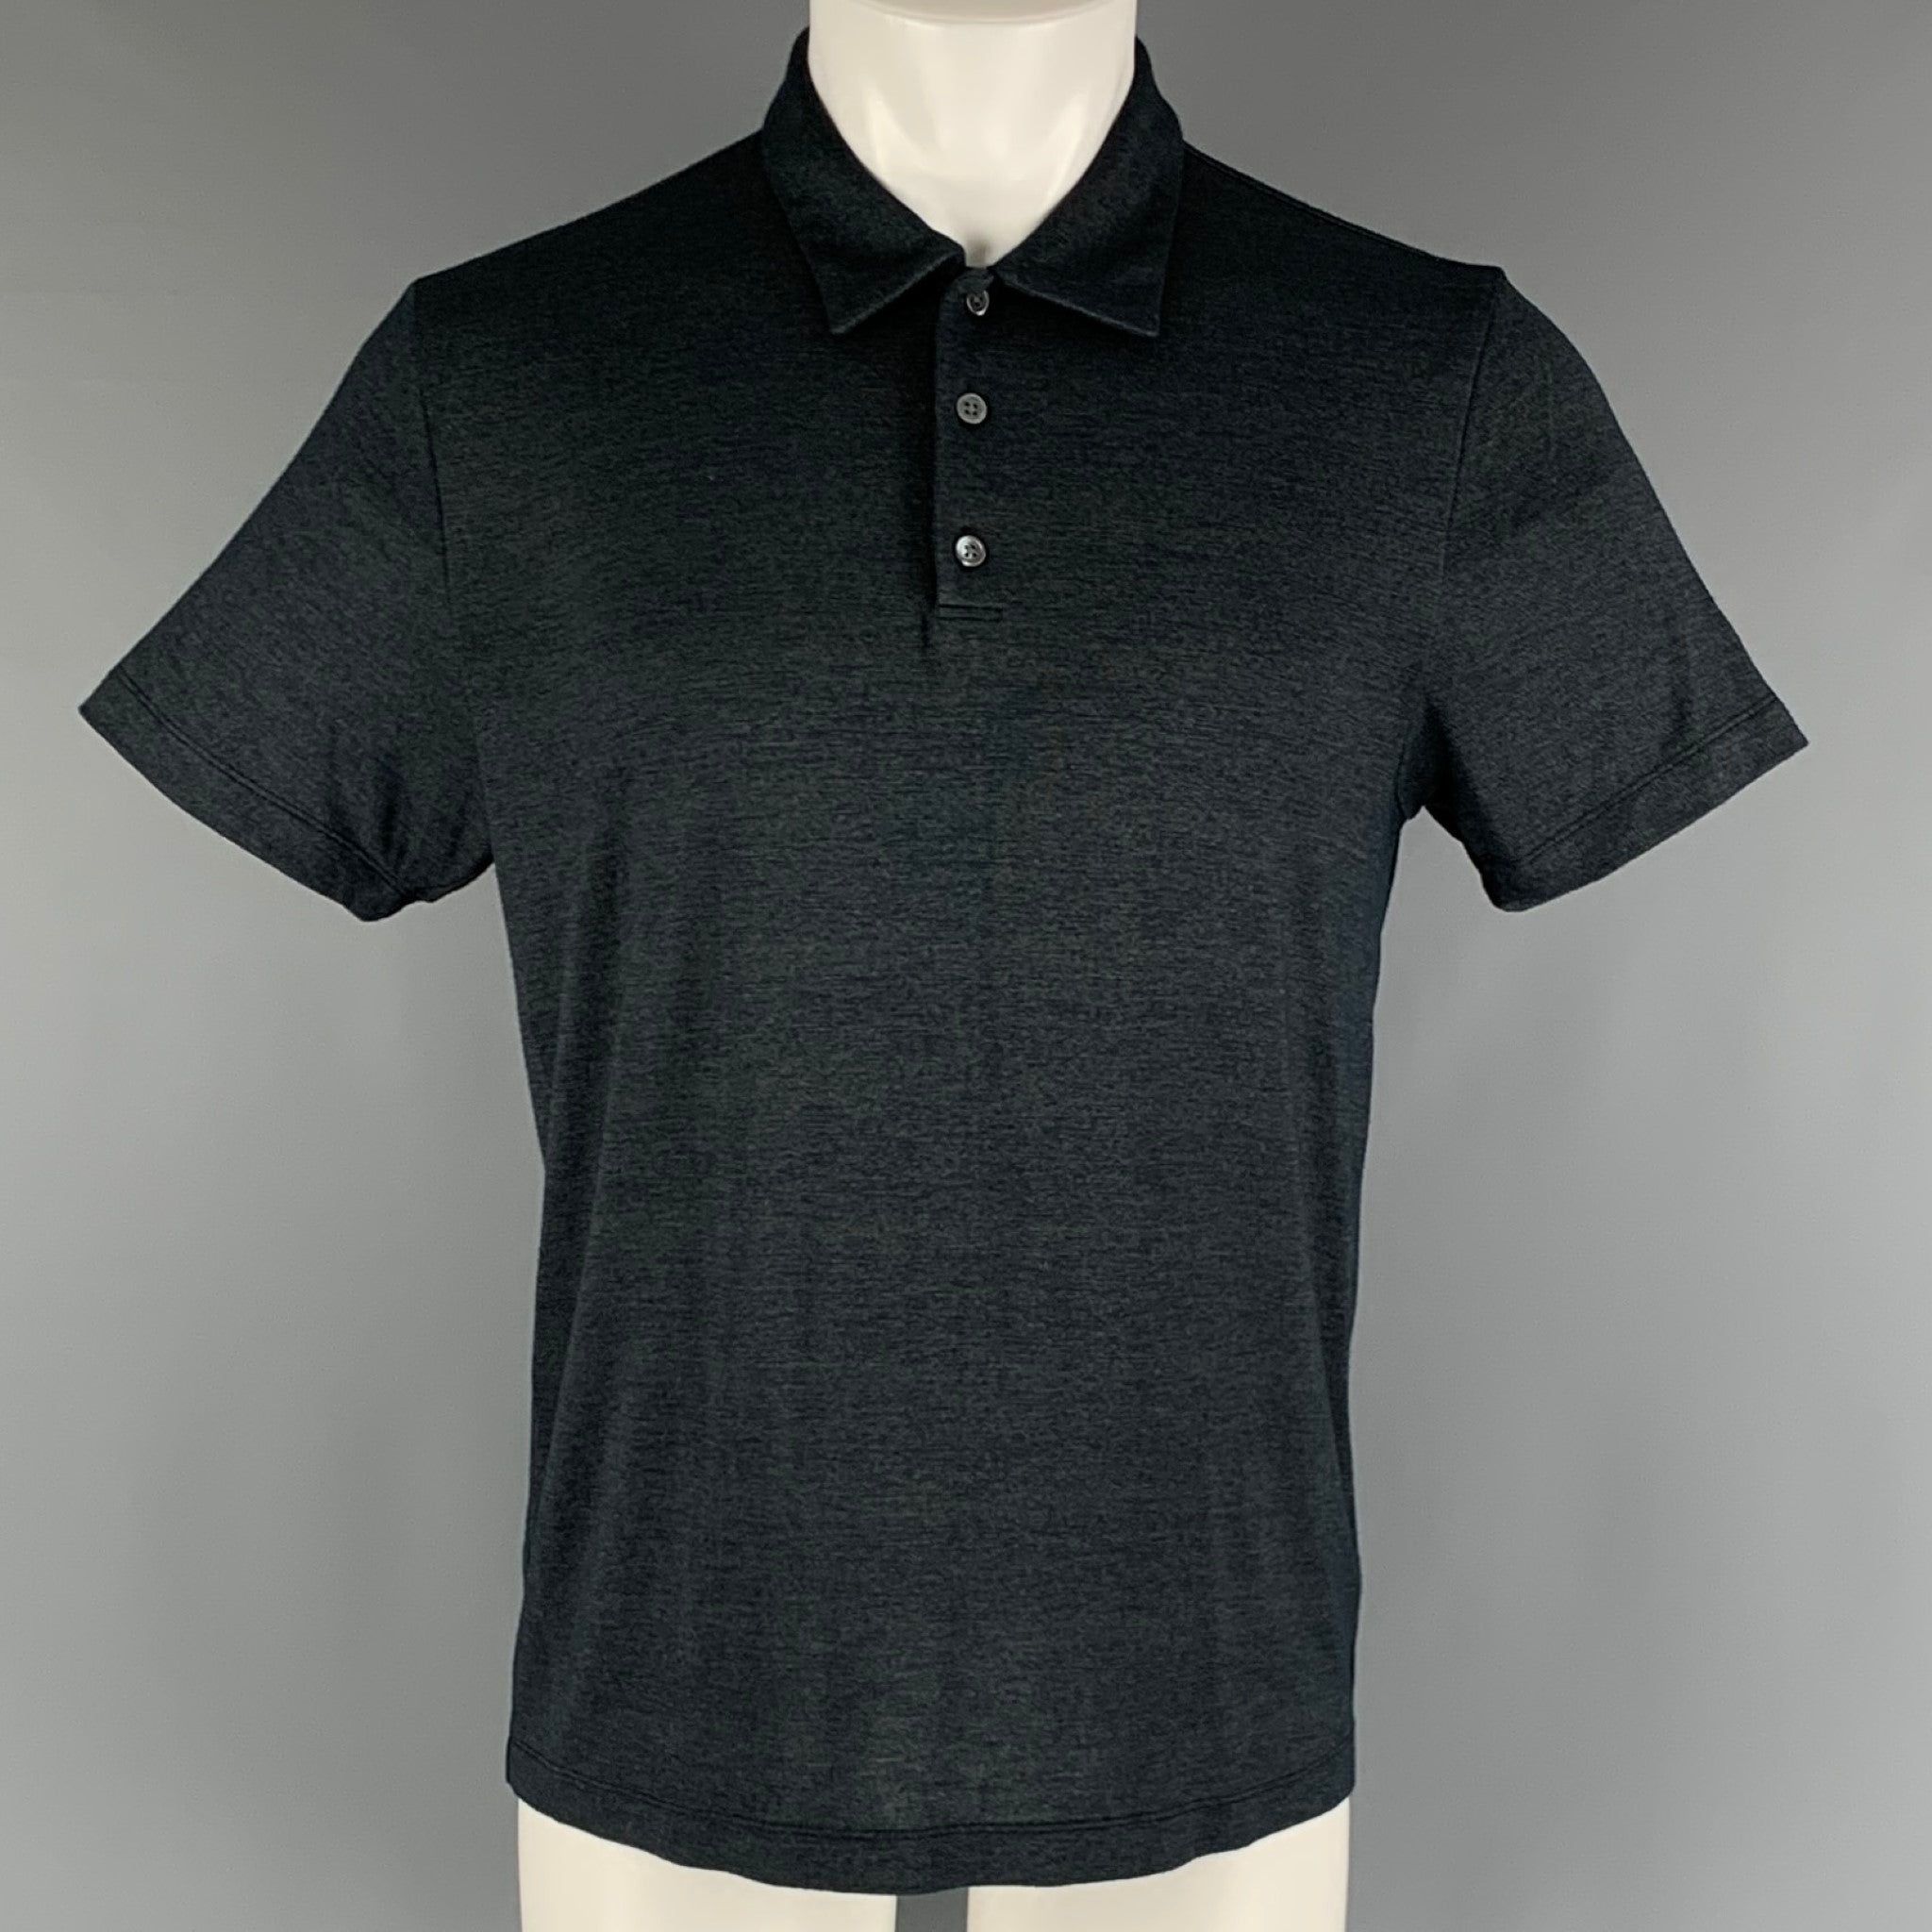 Louis Vuitton - Authenticated Polo Shirt - Cotton Green Plain for Men, Very Good Condition